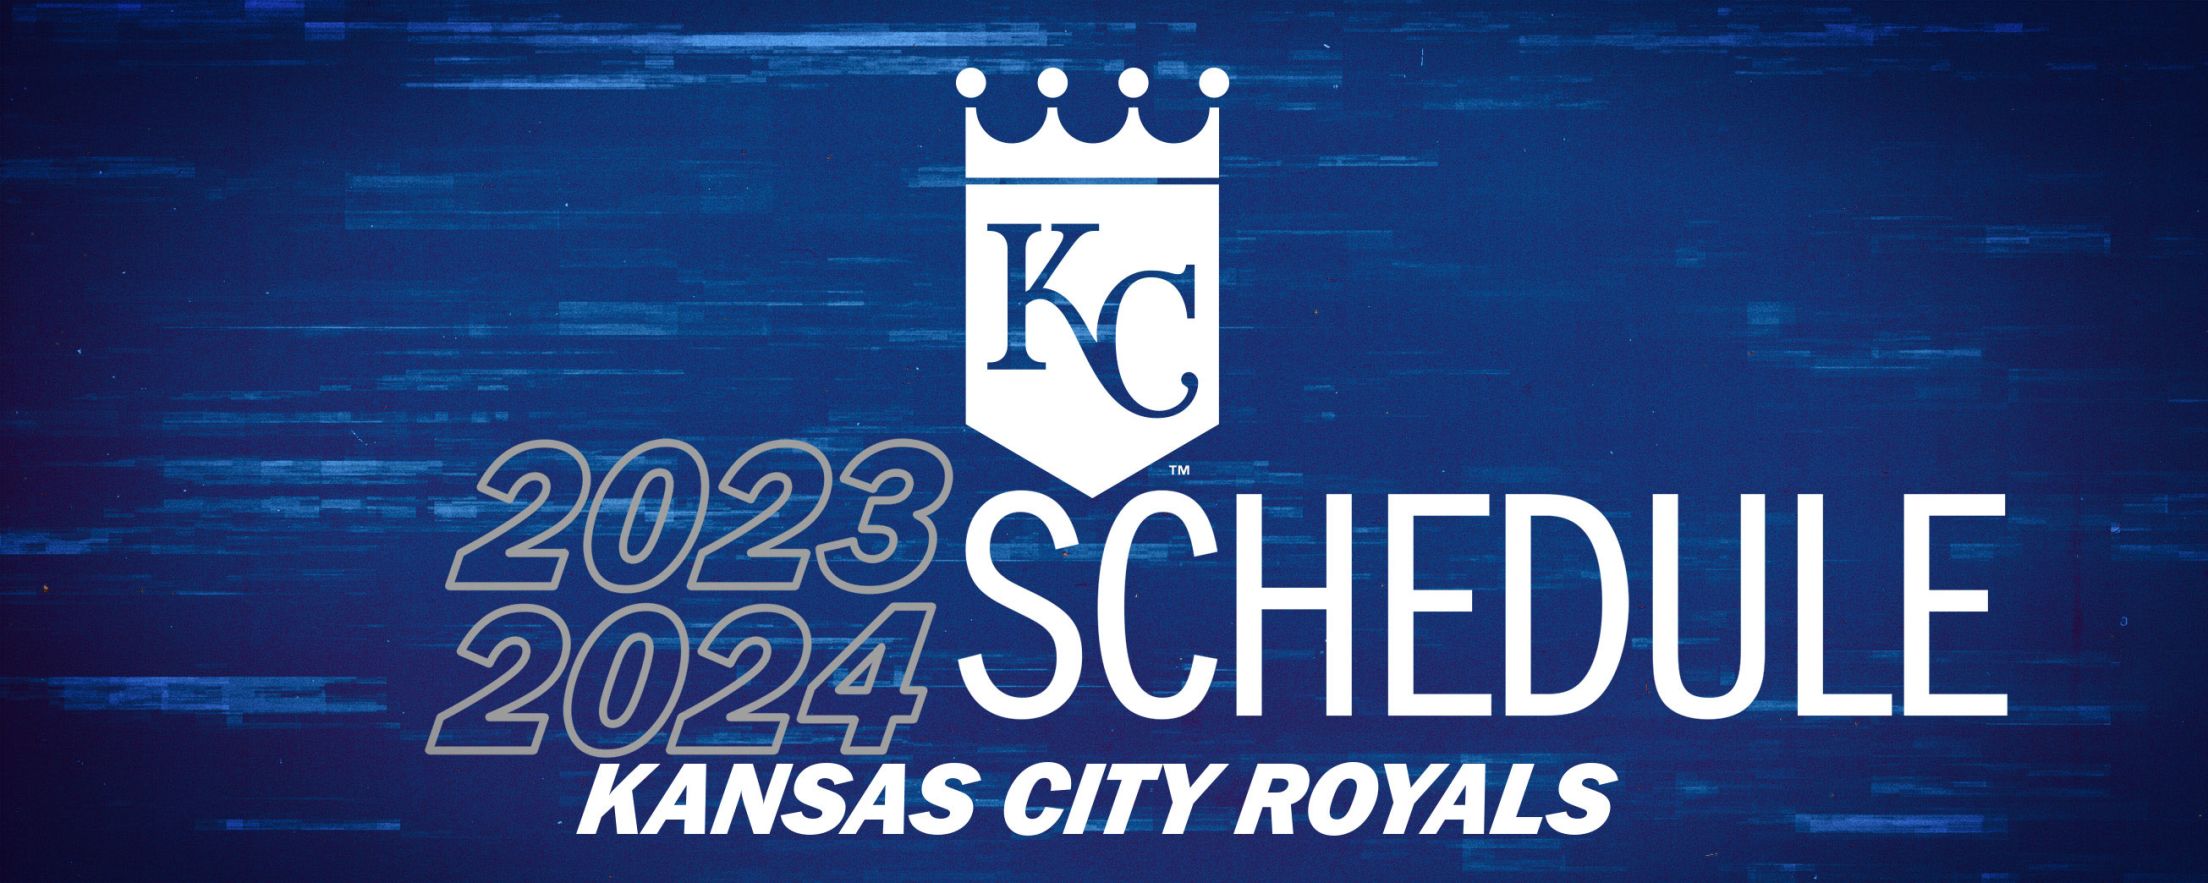 Kansas City Royals 2024 Promotional Schedule esther kiersten